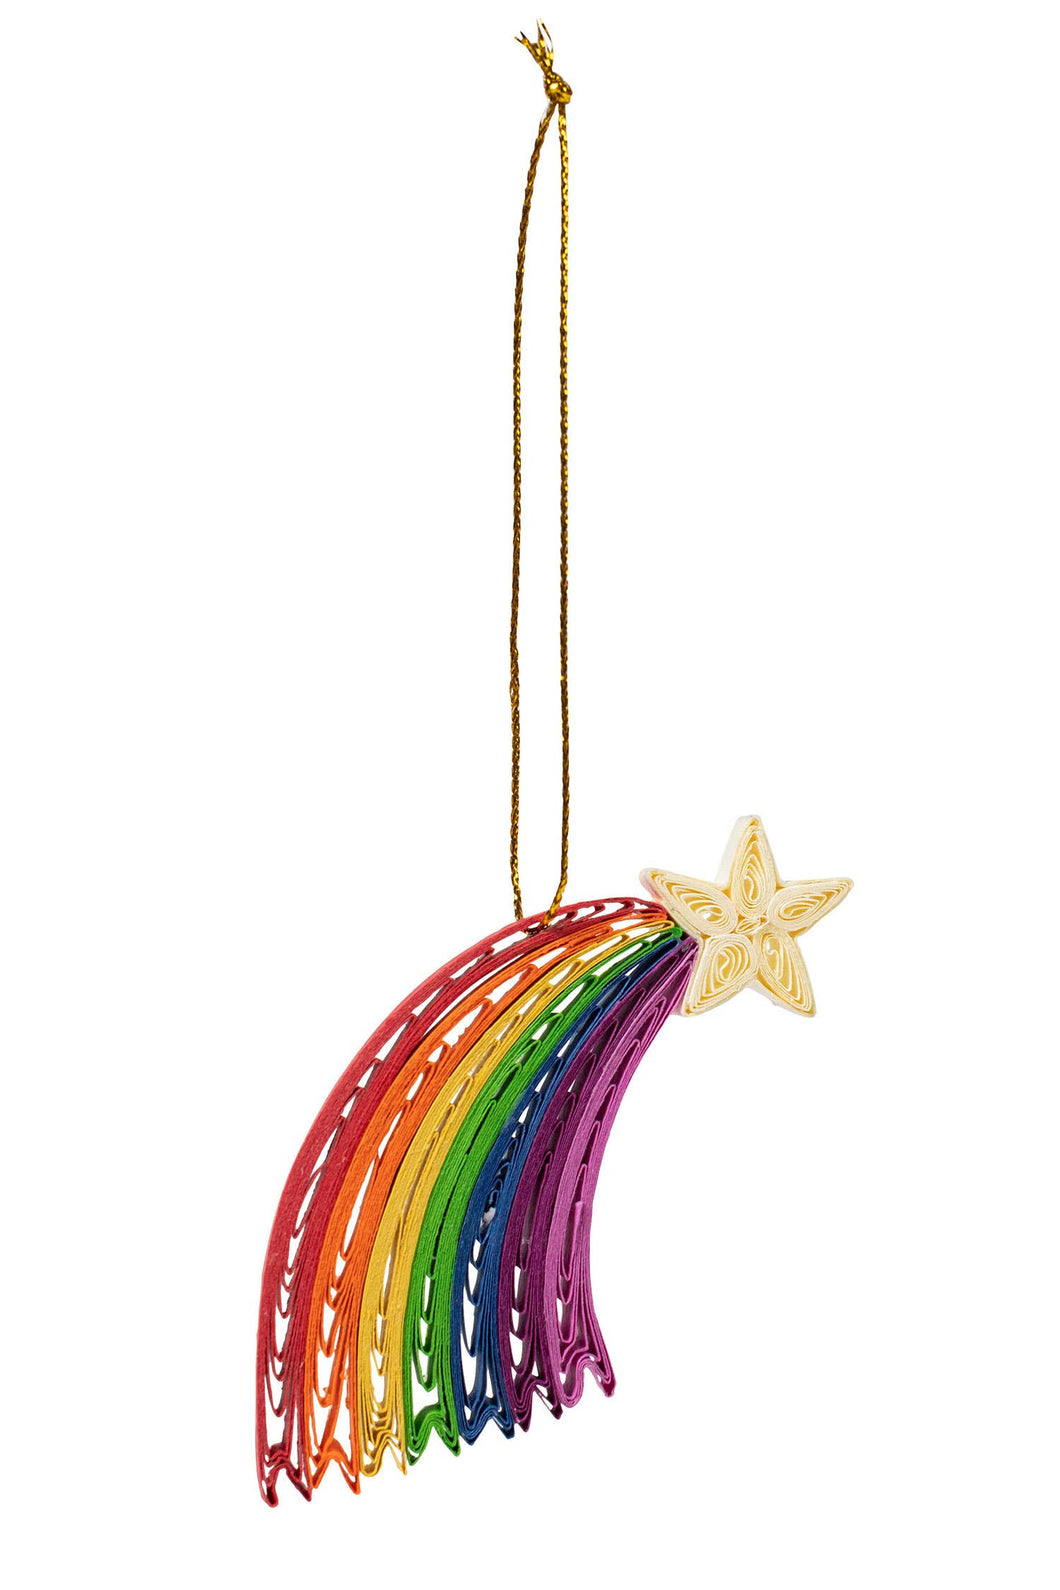 Quill Rainbow Ornament